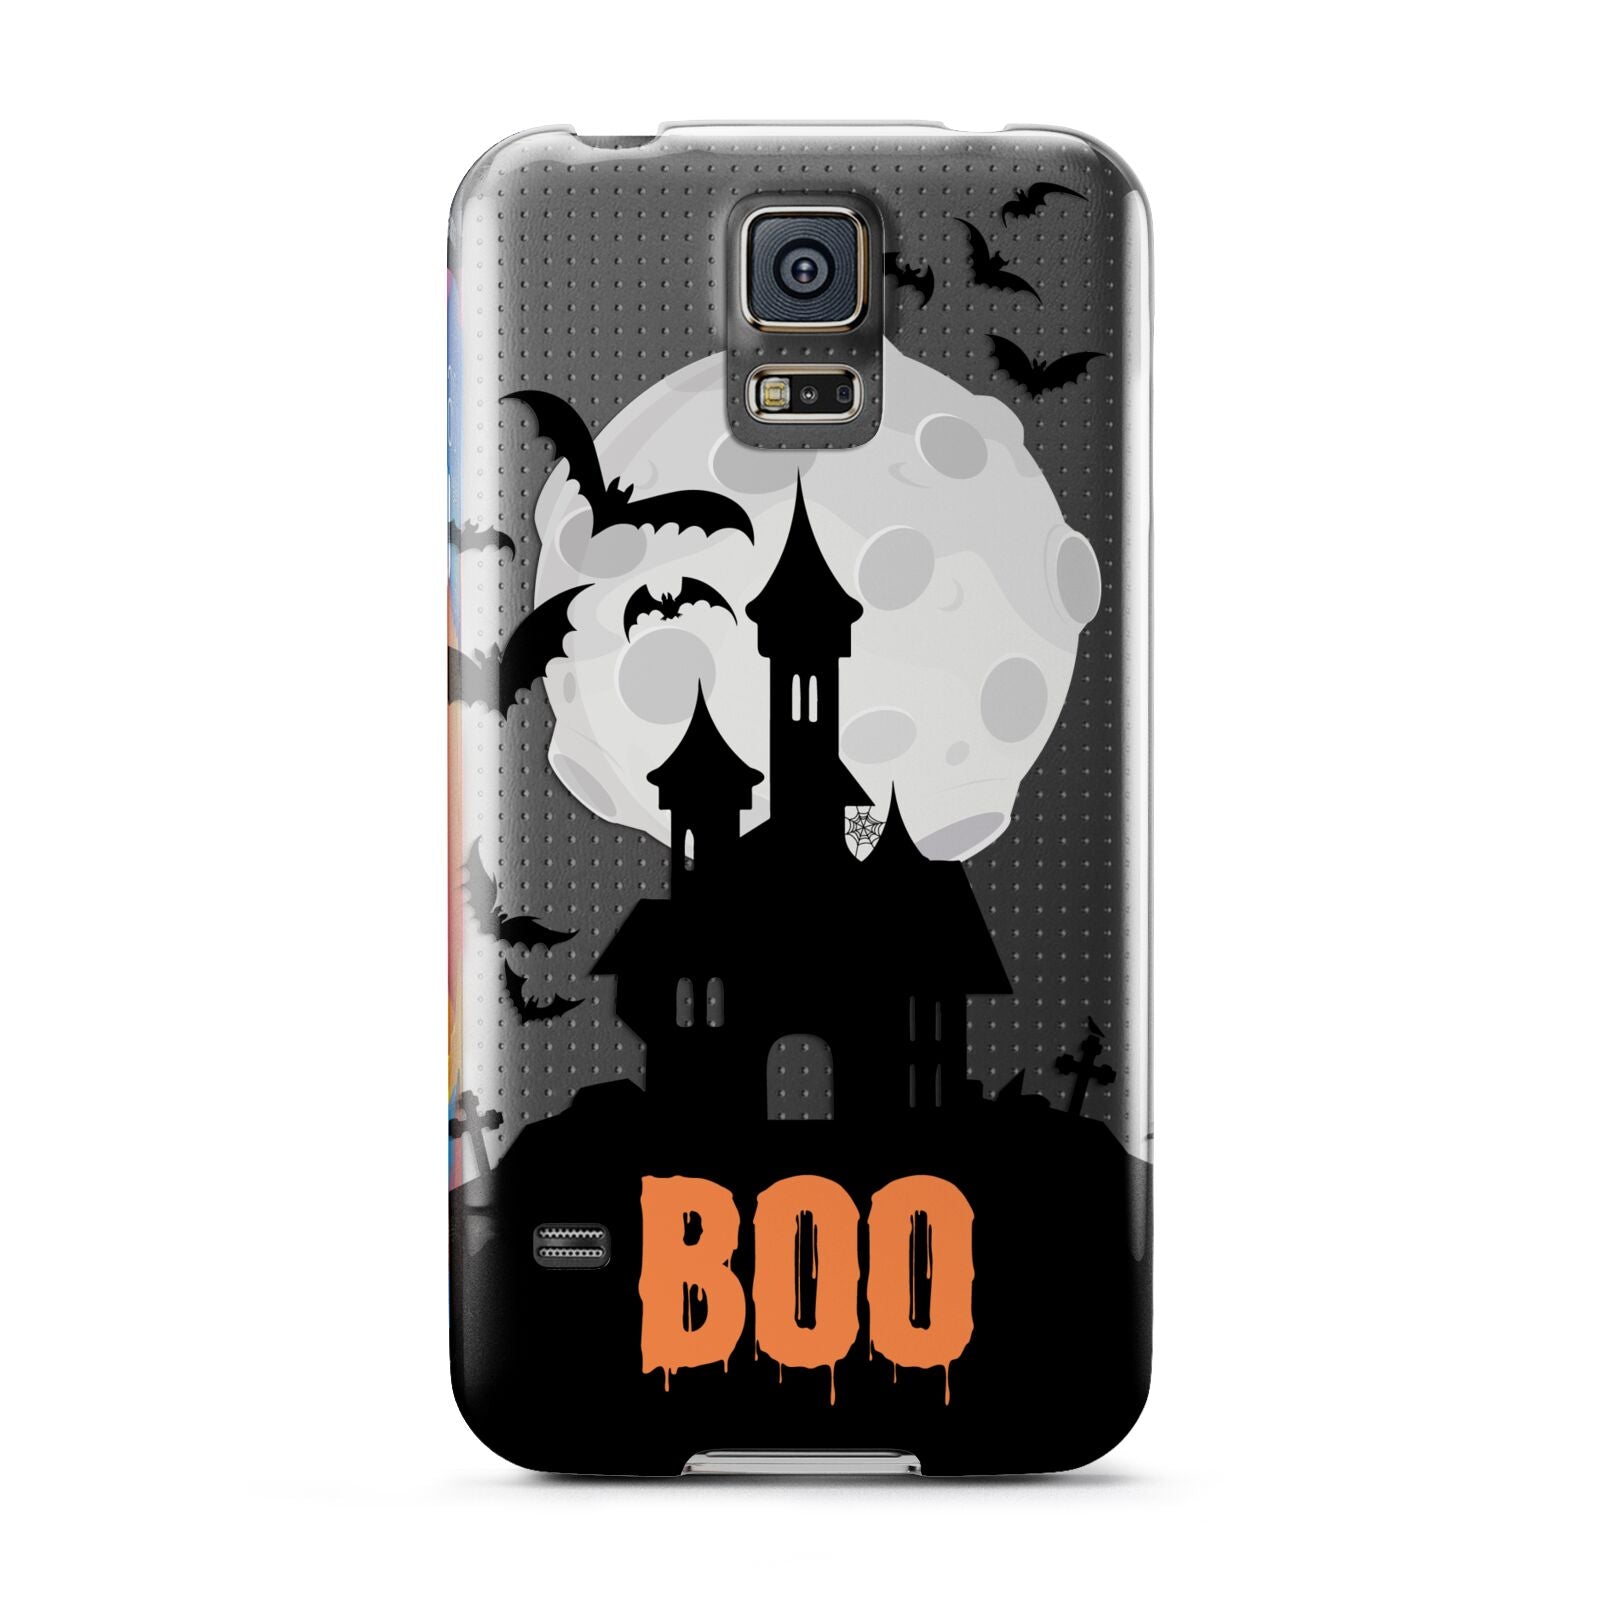 Boo Gothic Black Halloween Samsung Galaxy S5 Case